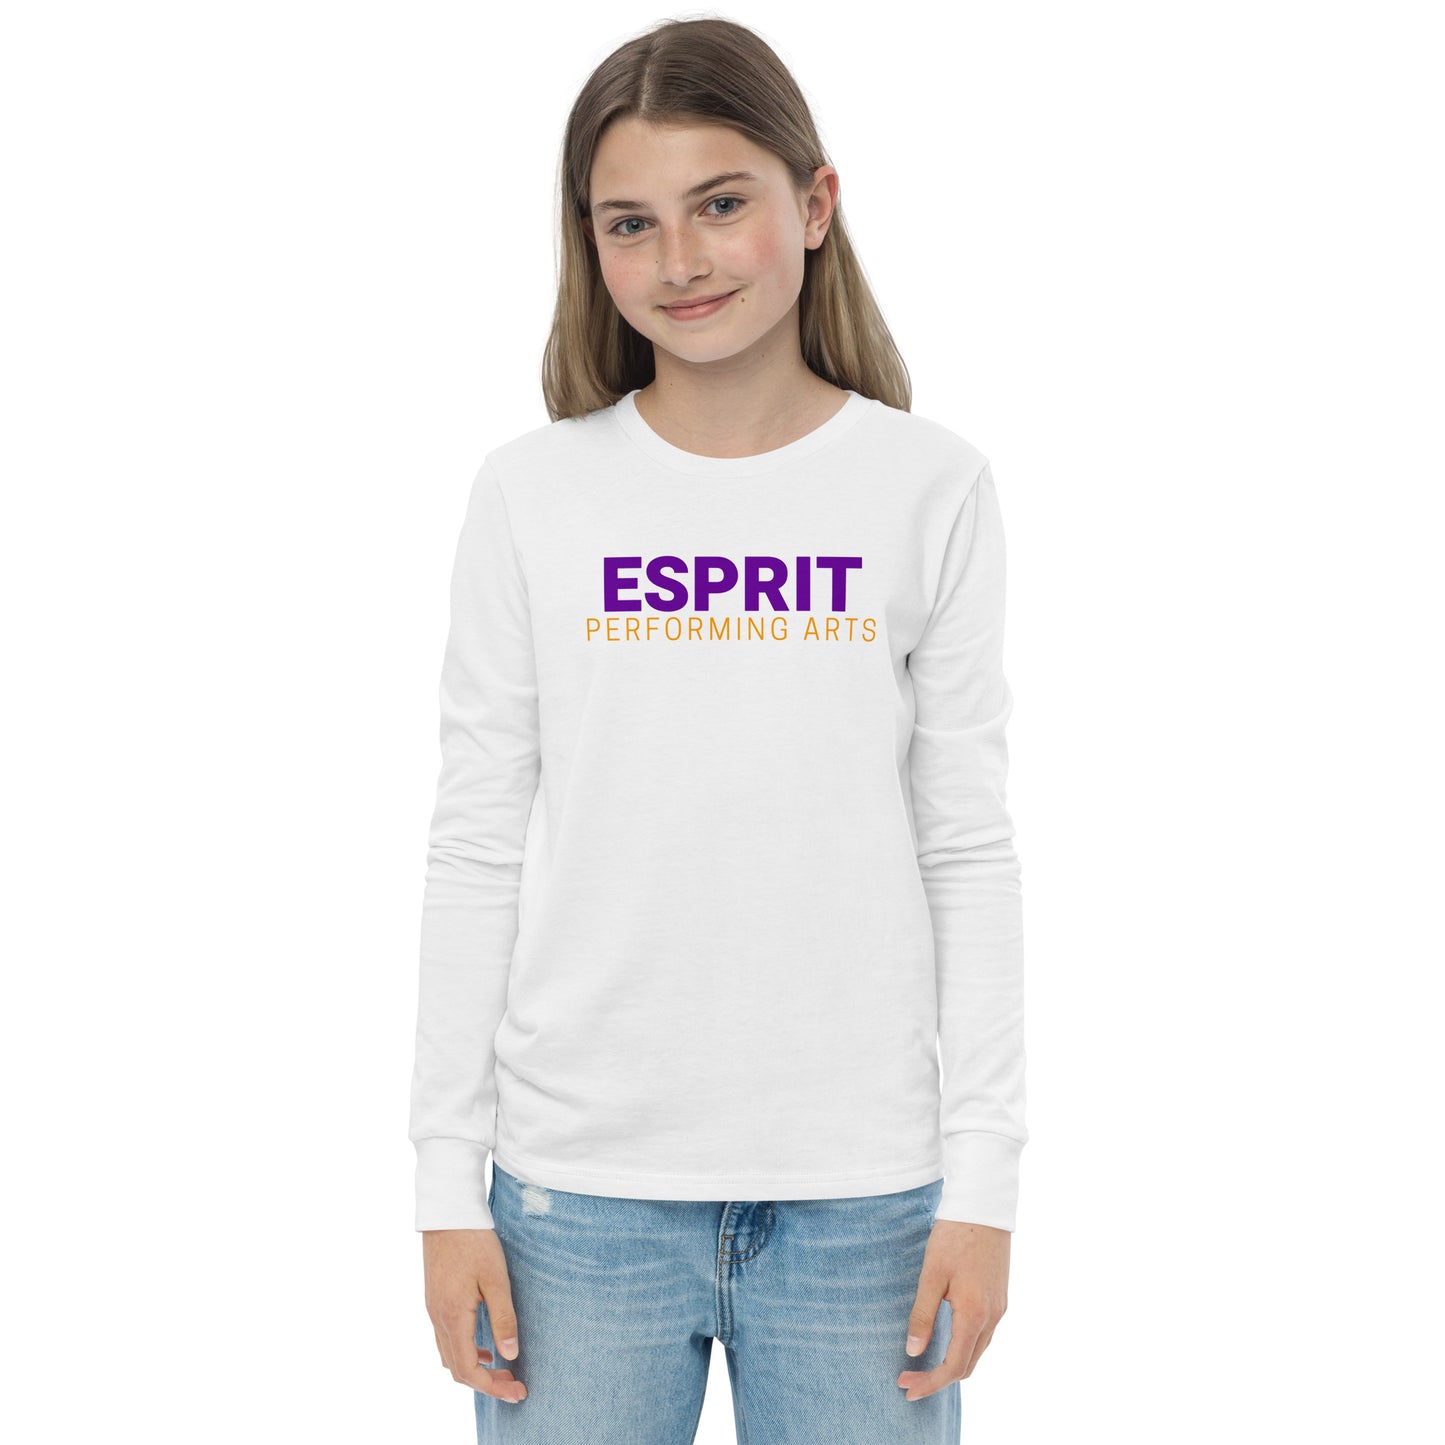 Esprit Performing Arts Logo T-Shirt - Long Sleeve - Youth